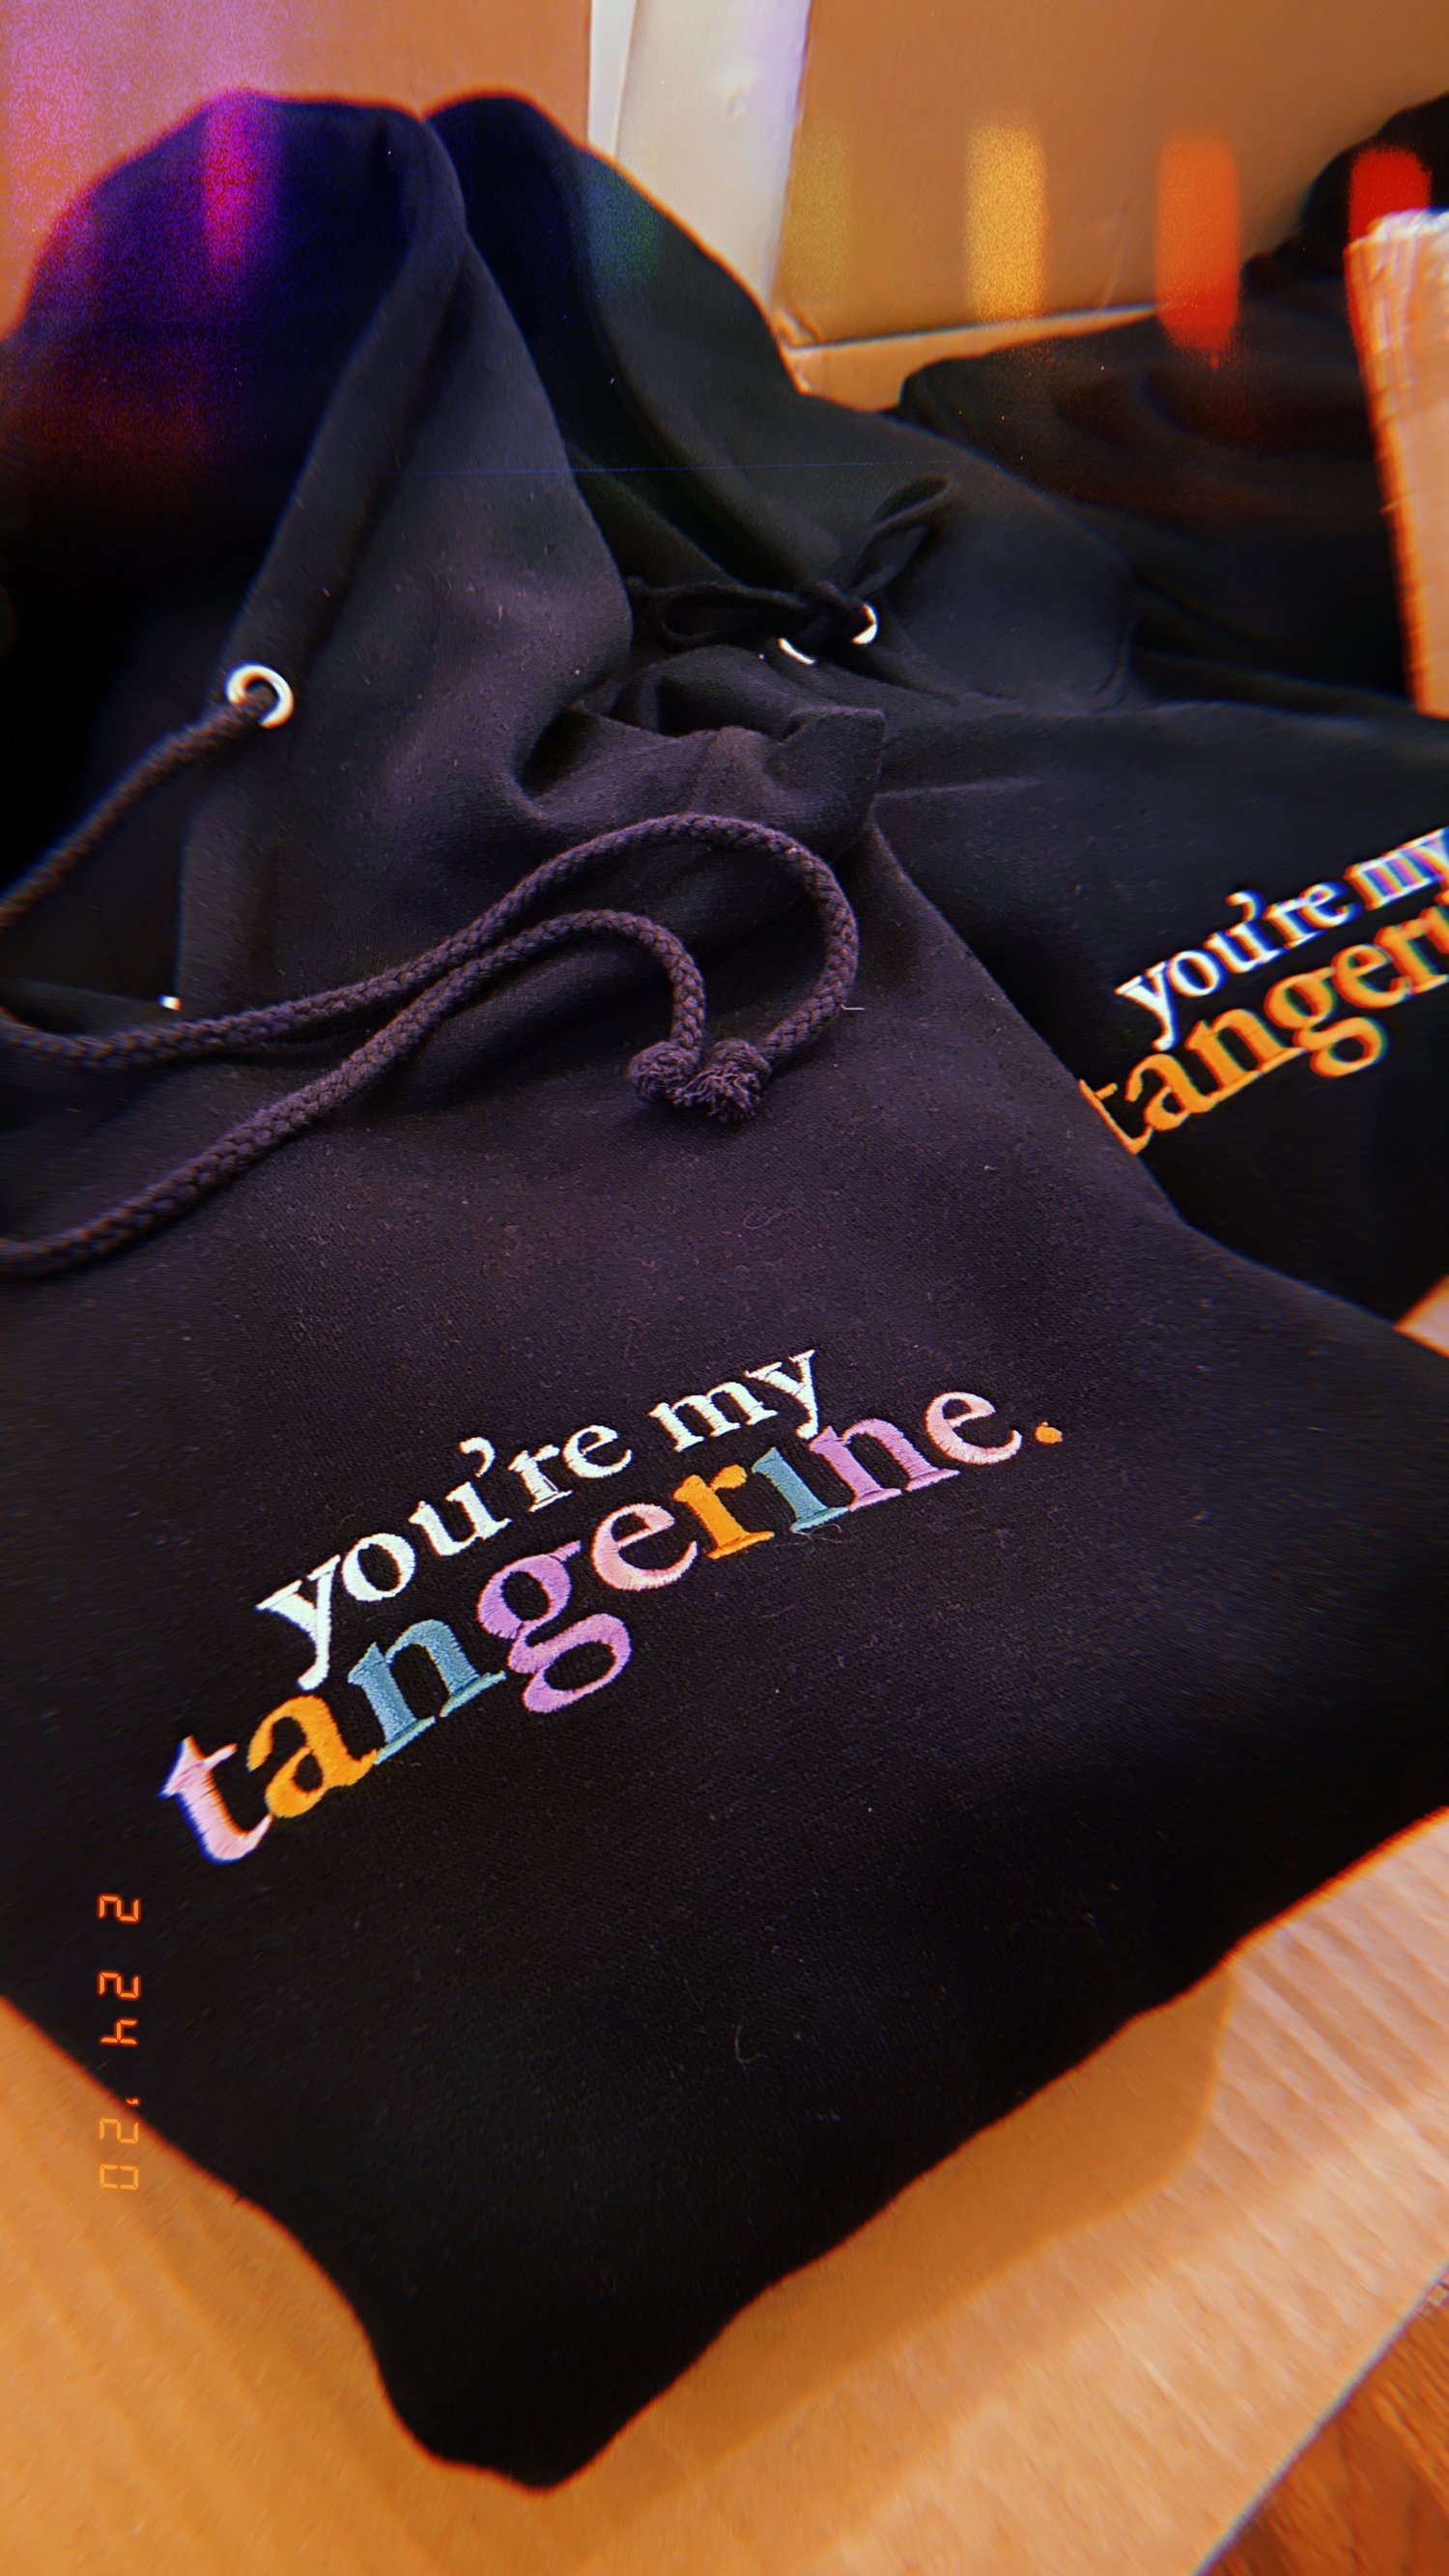 Image of Orange stitched "Tangerine" sweater